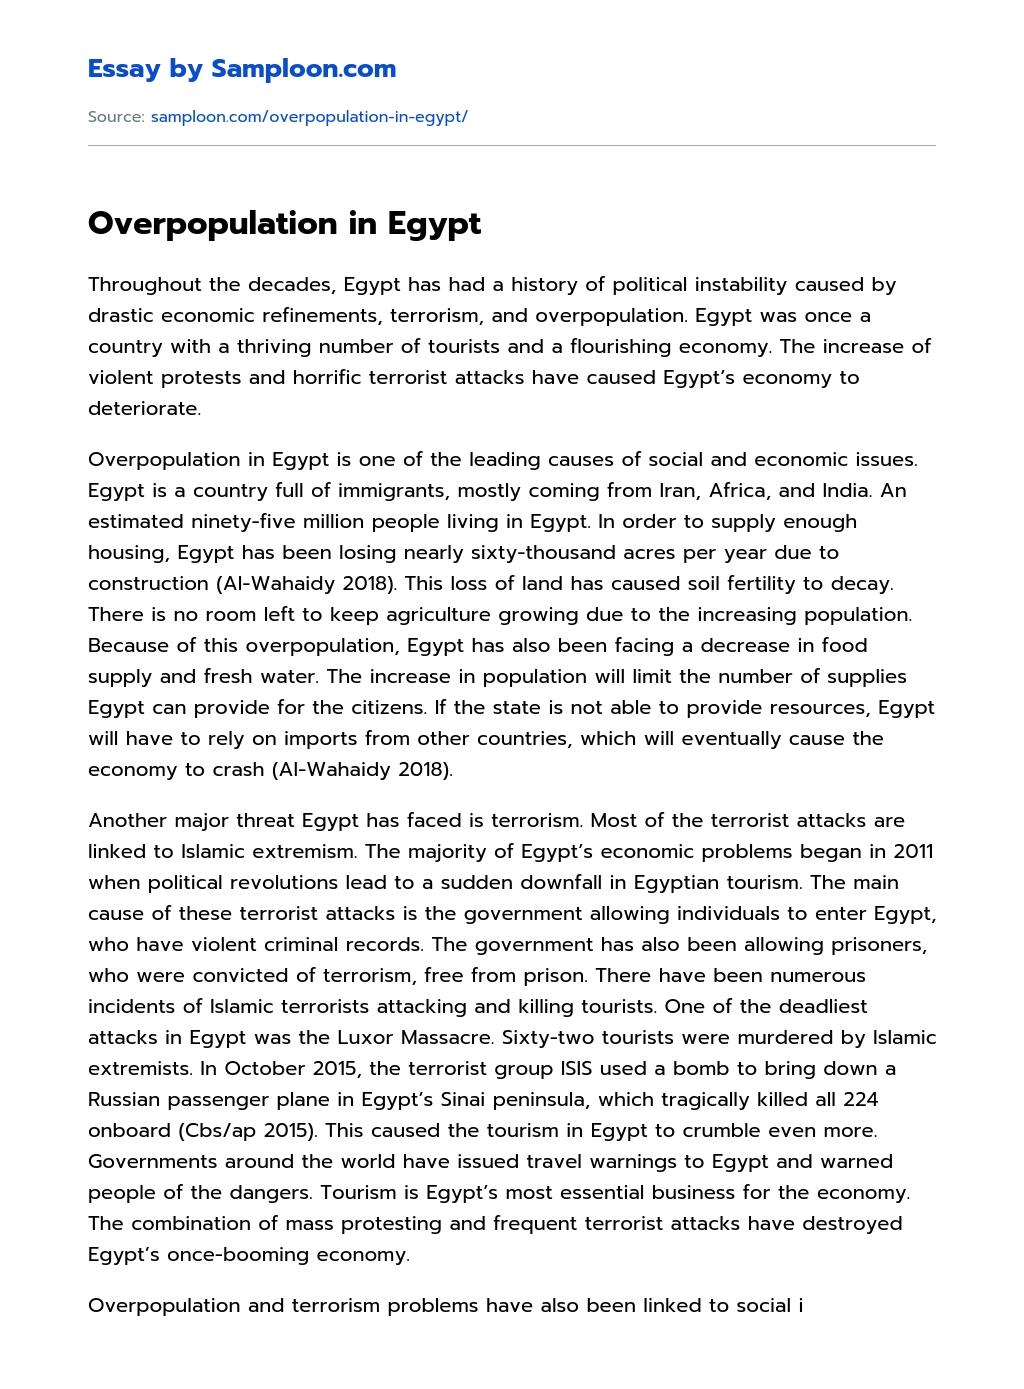 Overpopulation in Egypt essay